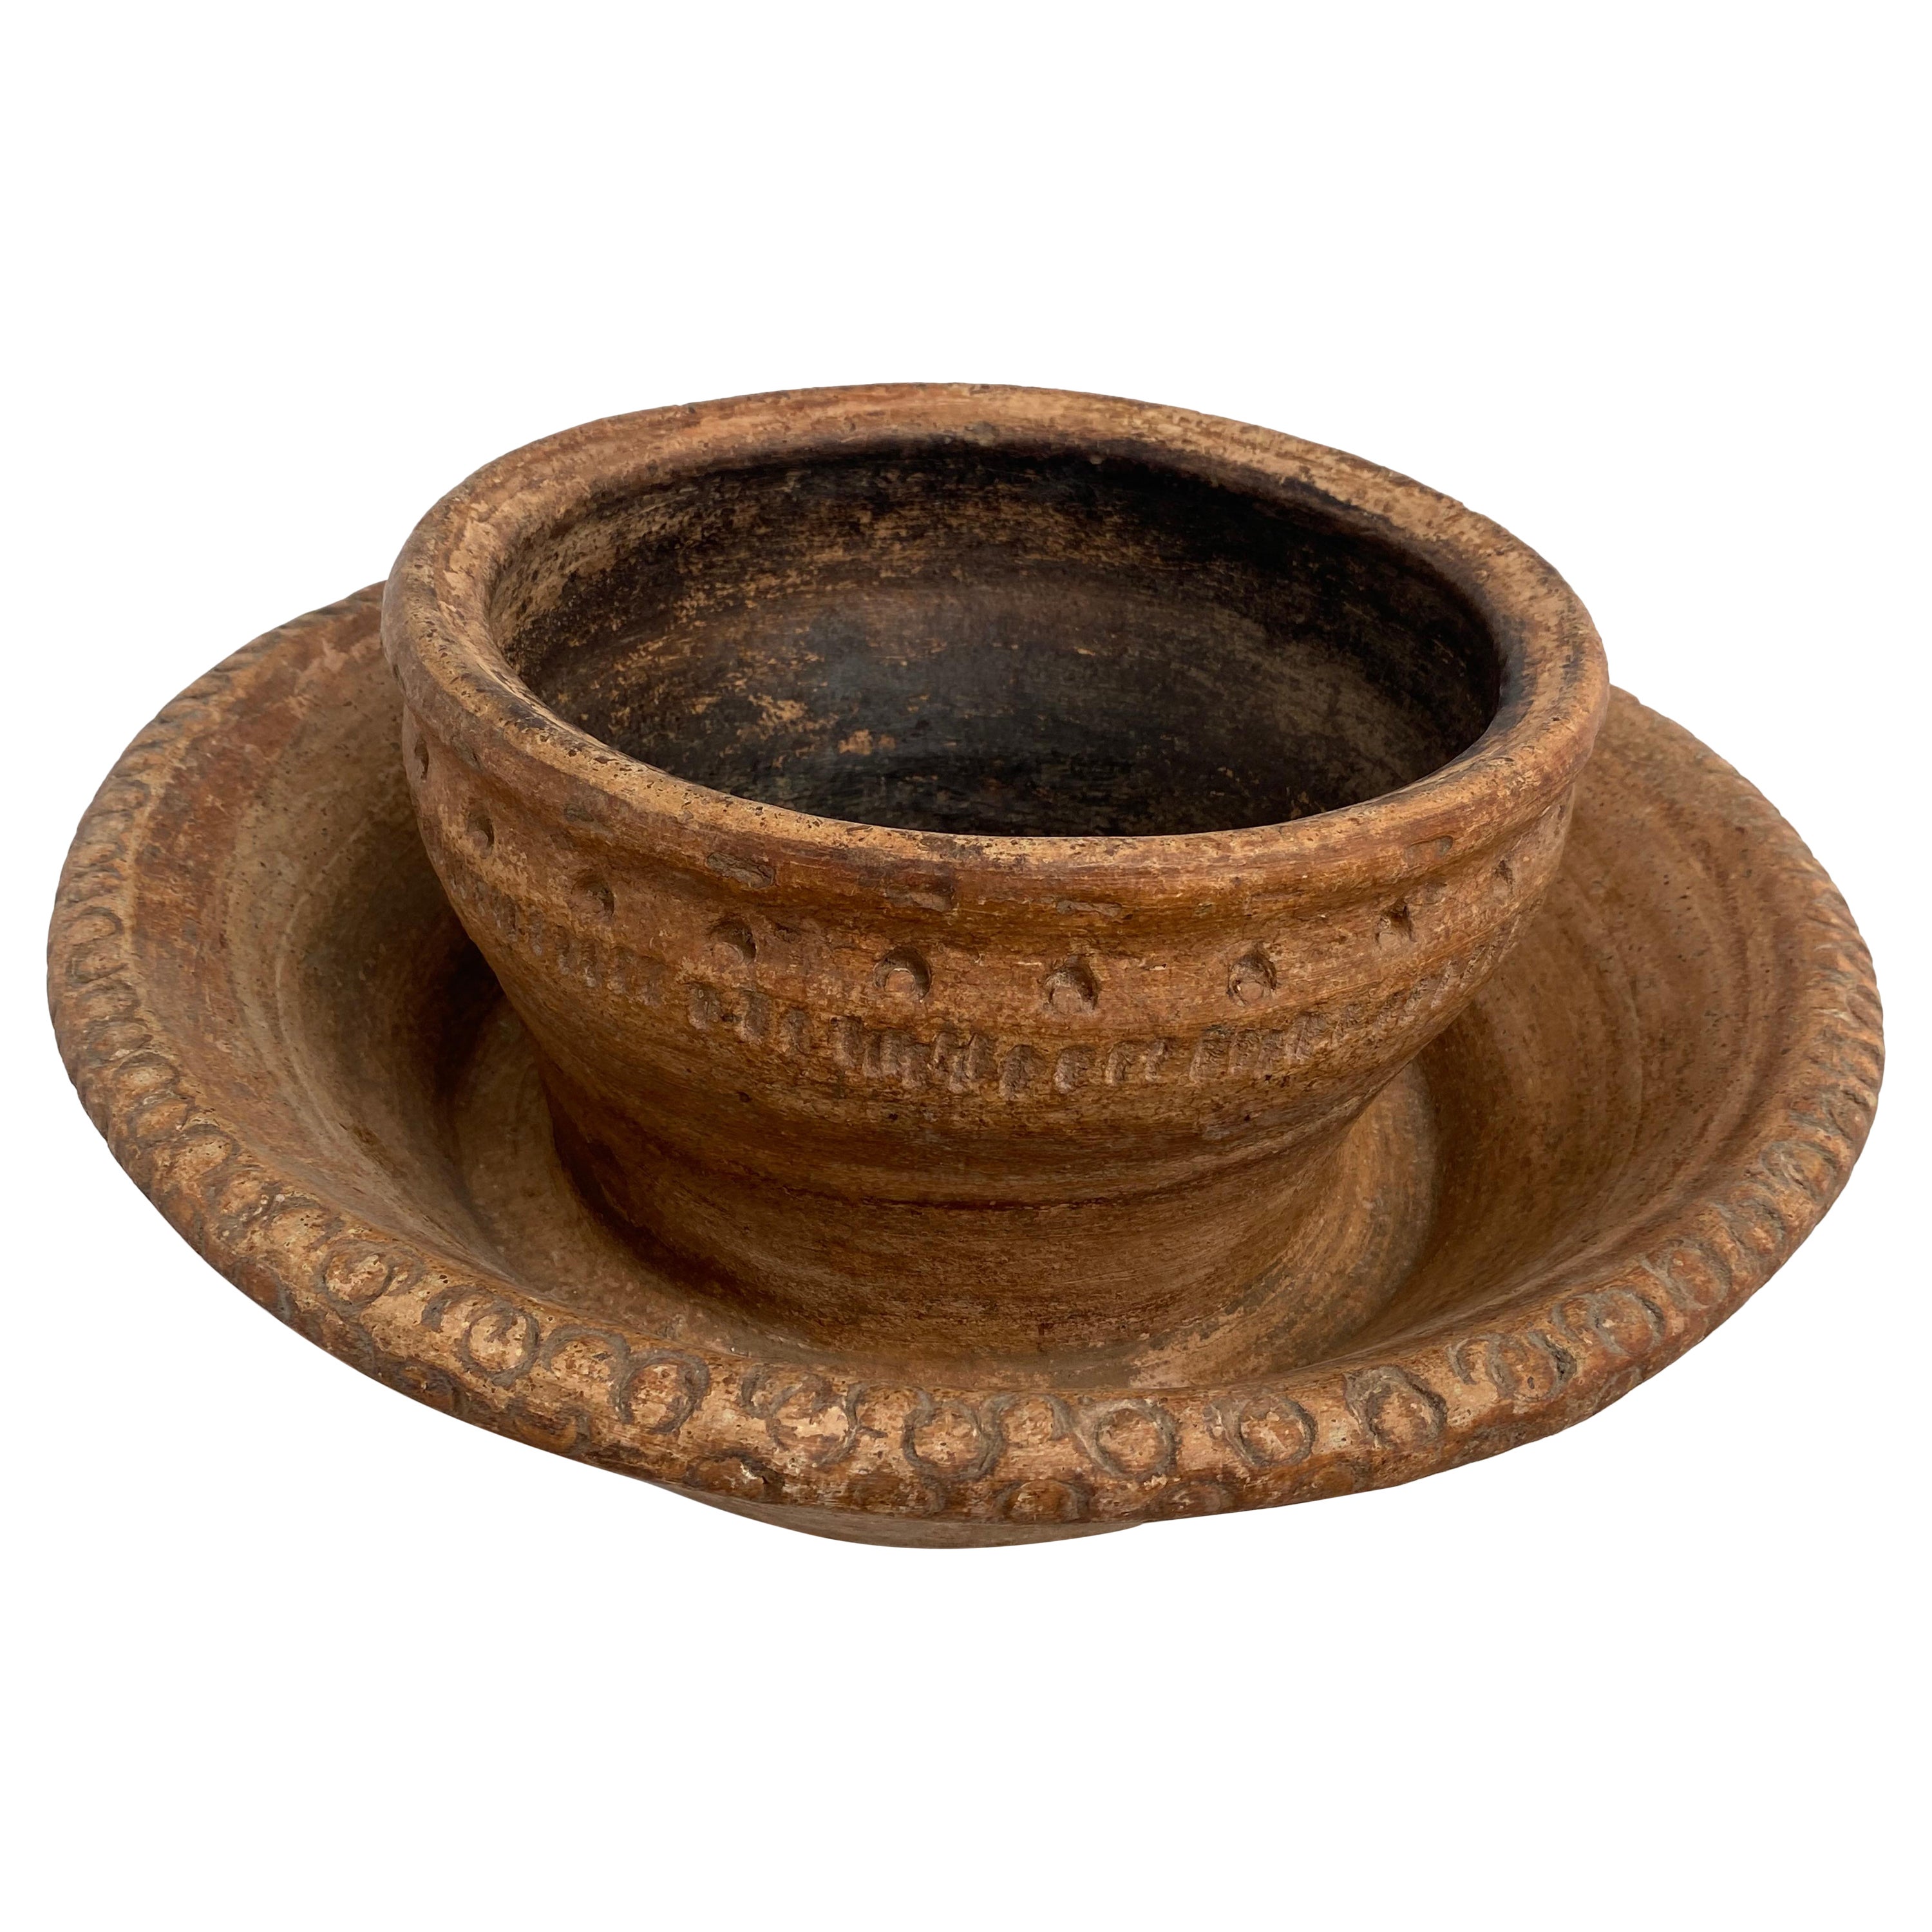 Antique Berber Terracotta Vase from Morocco